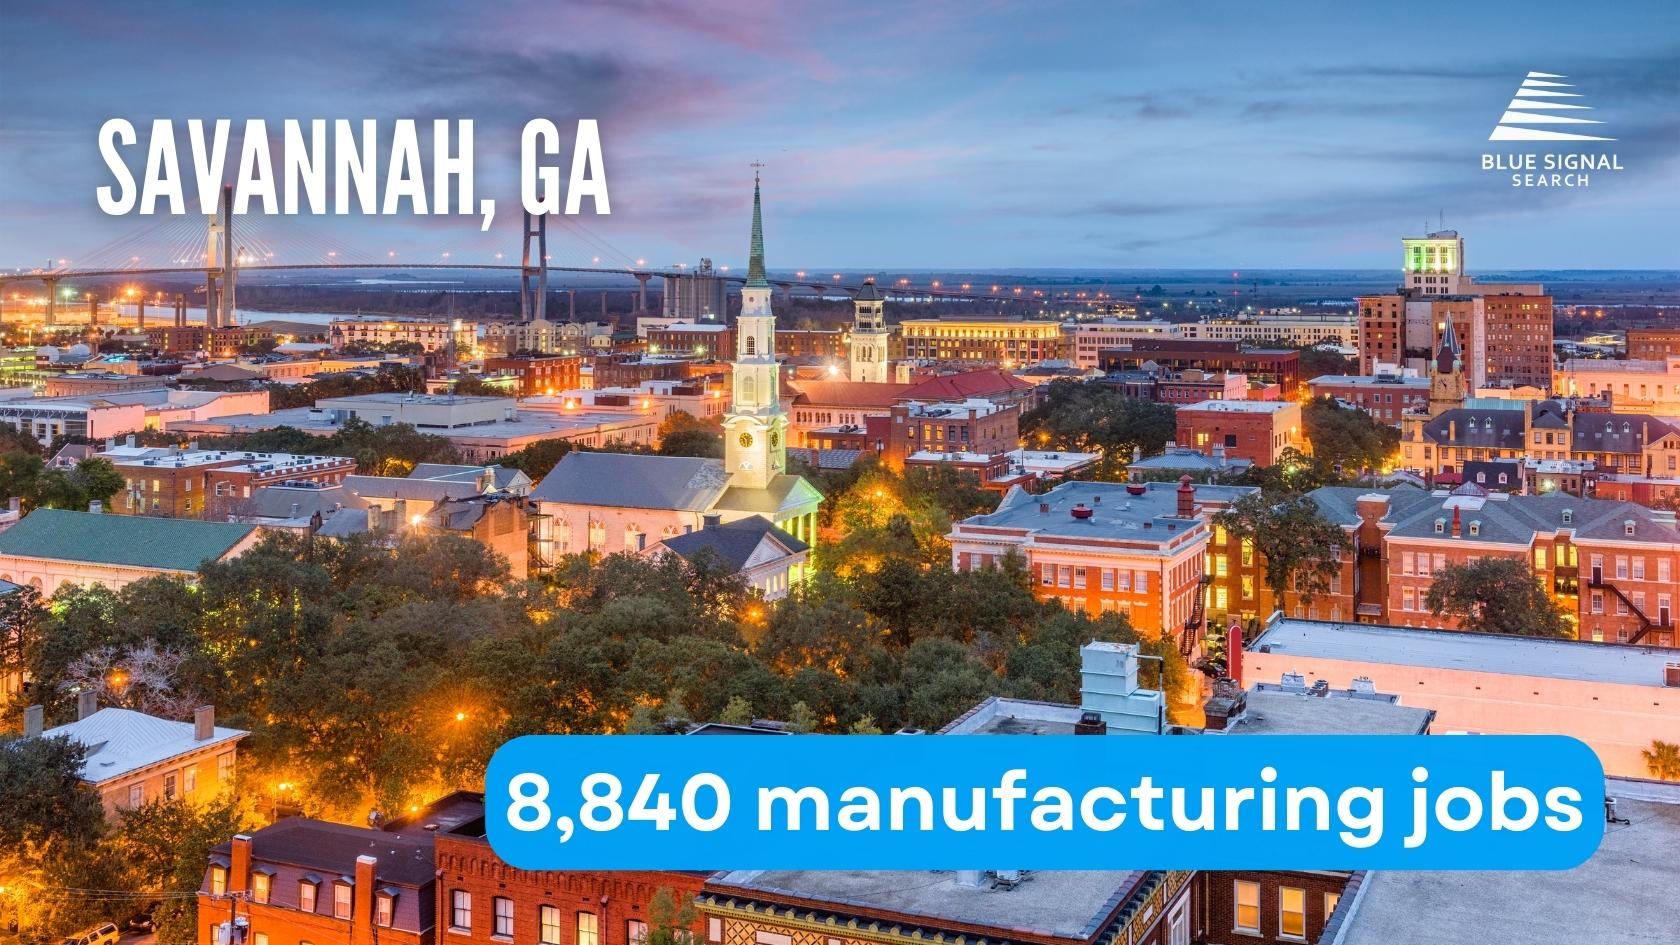 Skyline of Savannah, GA with key manufacturing statistics highlighted.